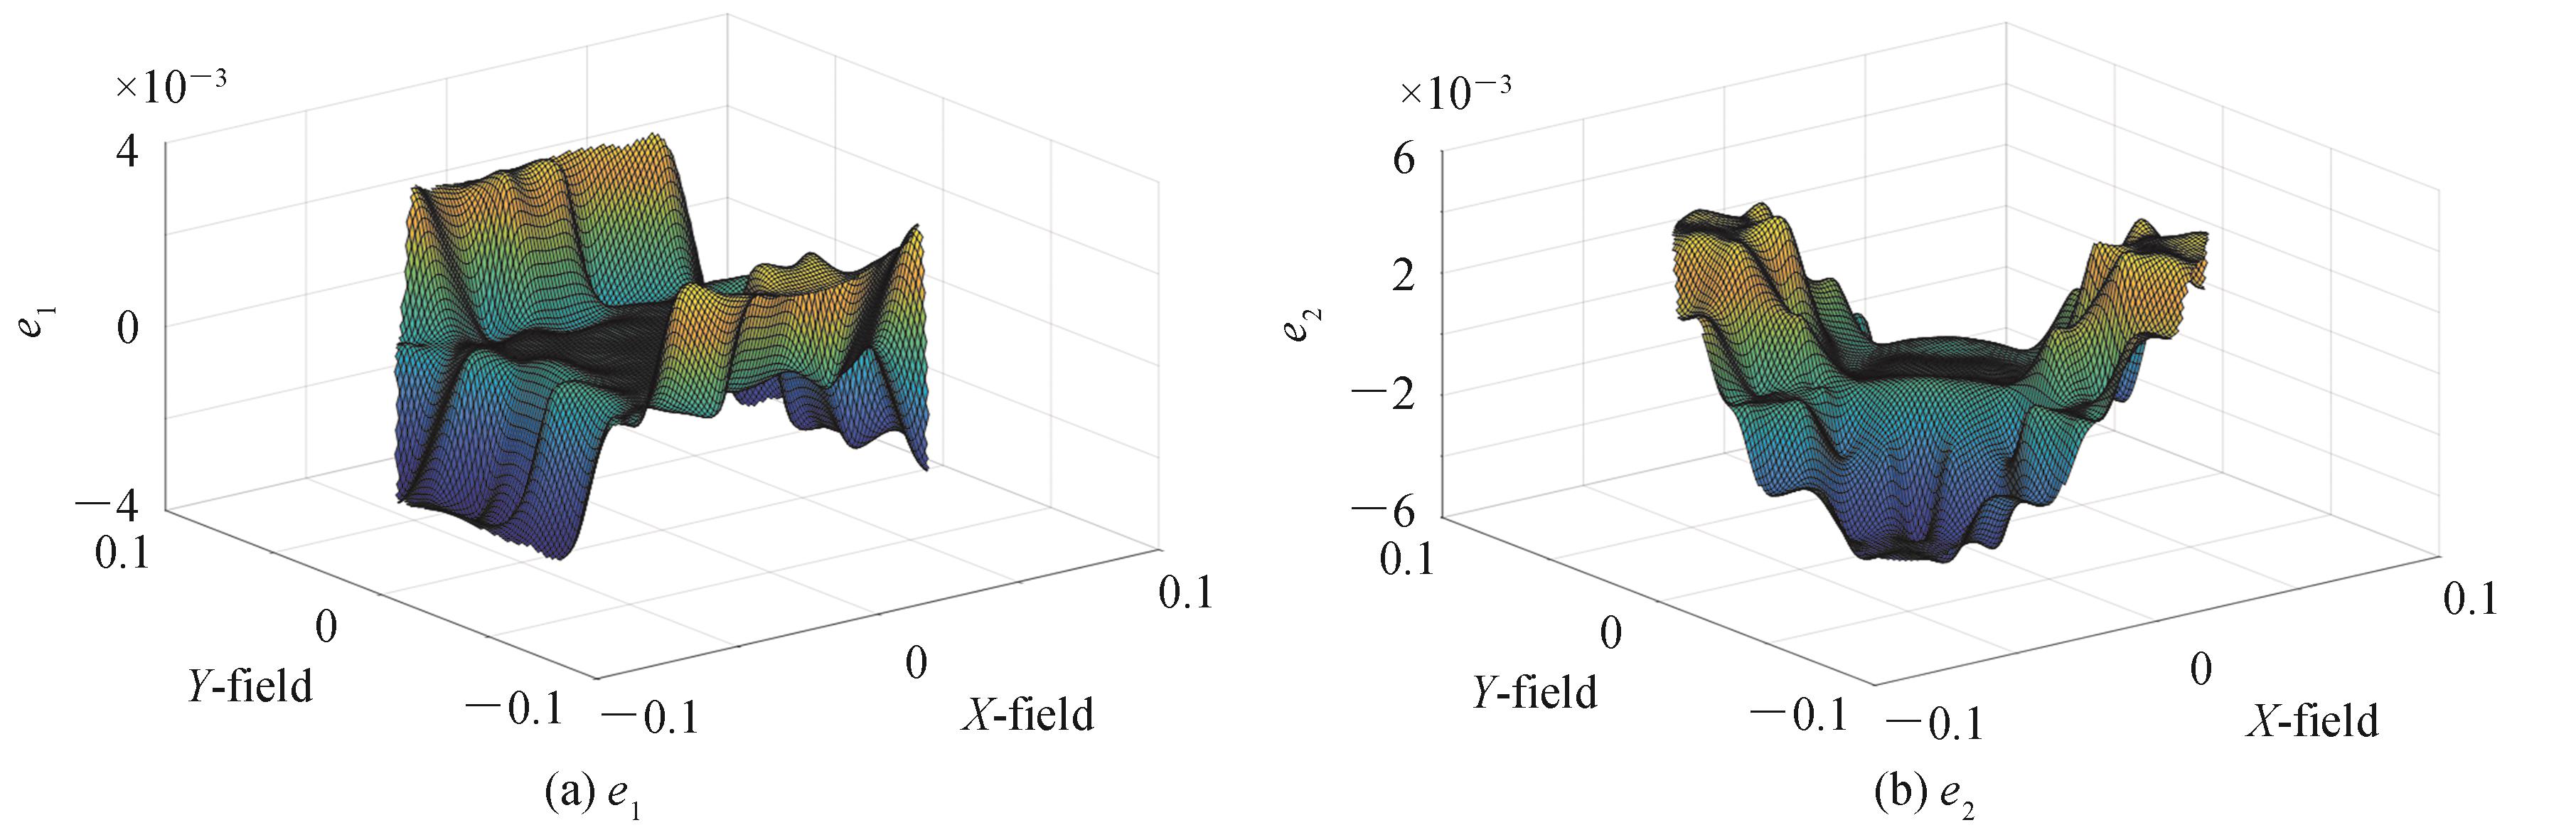 Distribution of ellipticity e1,e2 on circular field of view